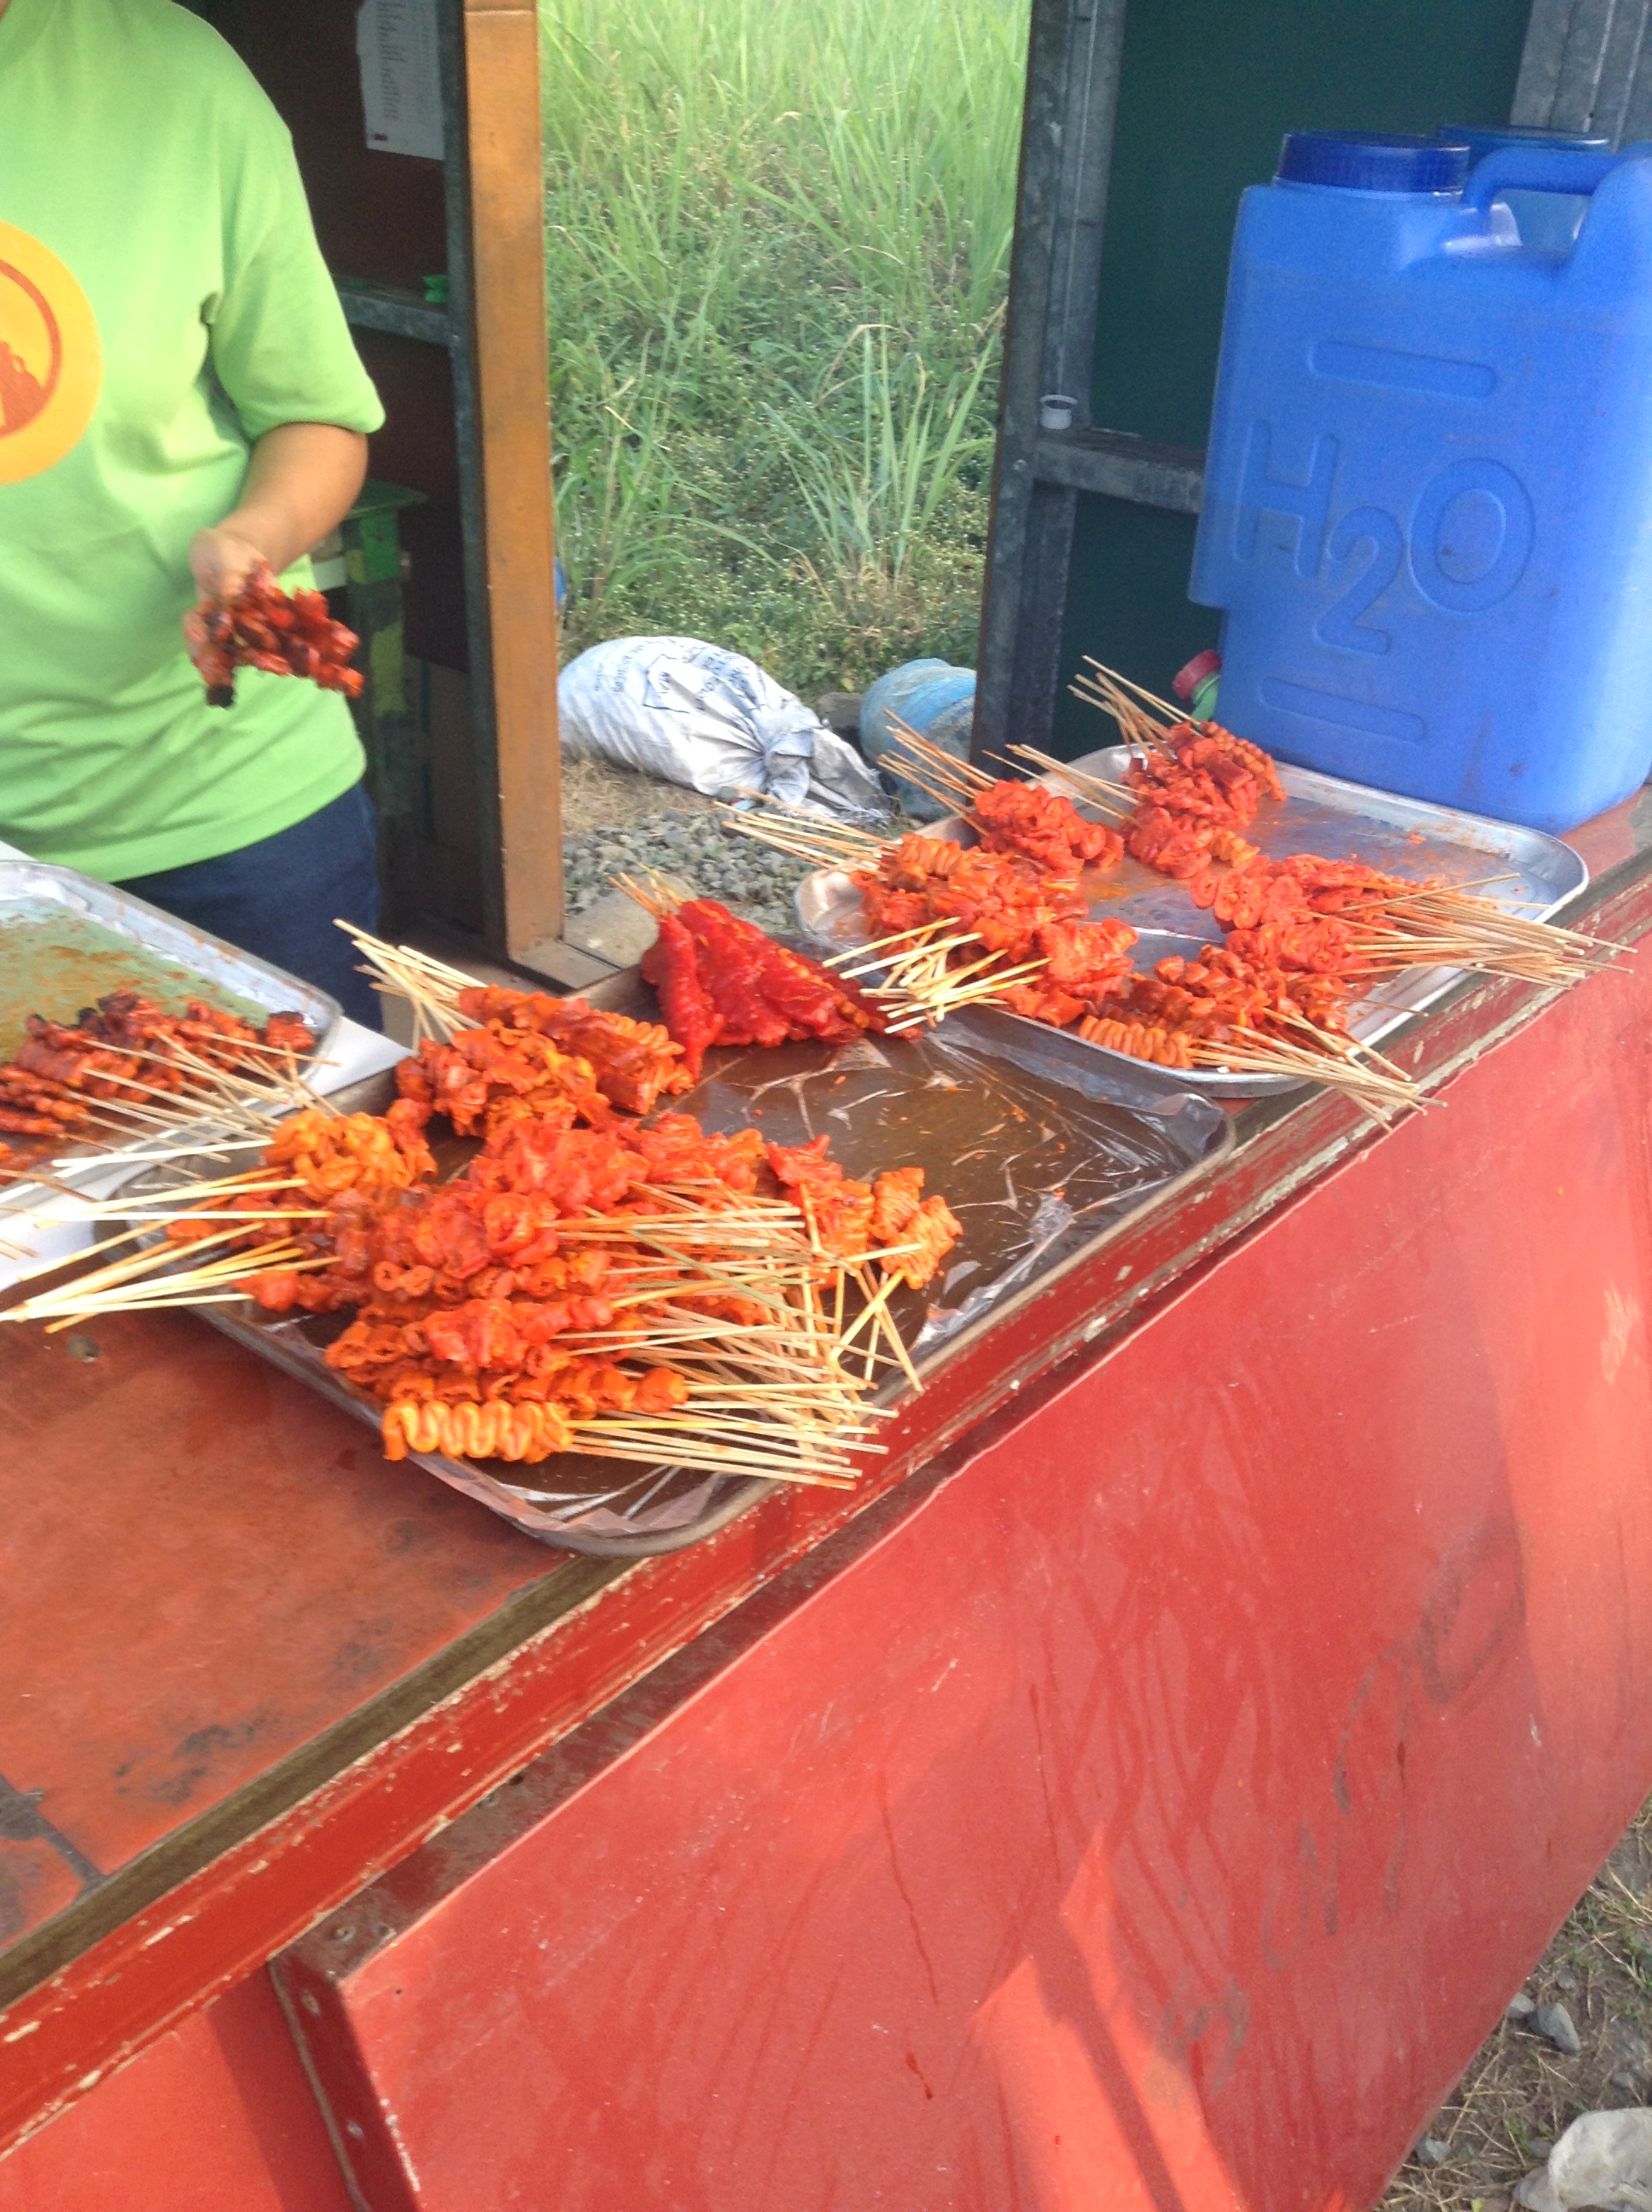 Filipino comfort food - Isaw Manok, grilled chicken intestines